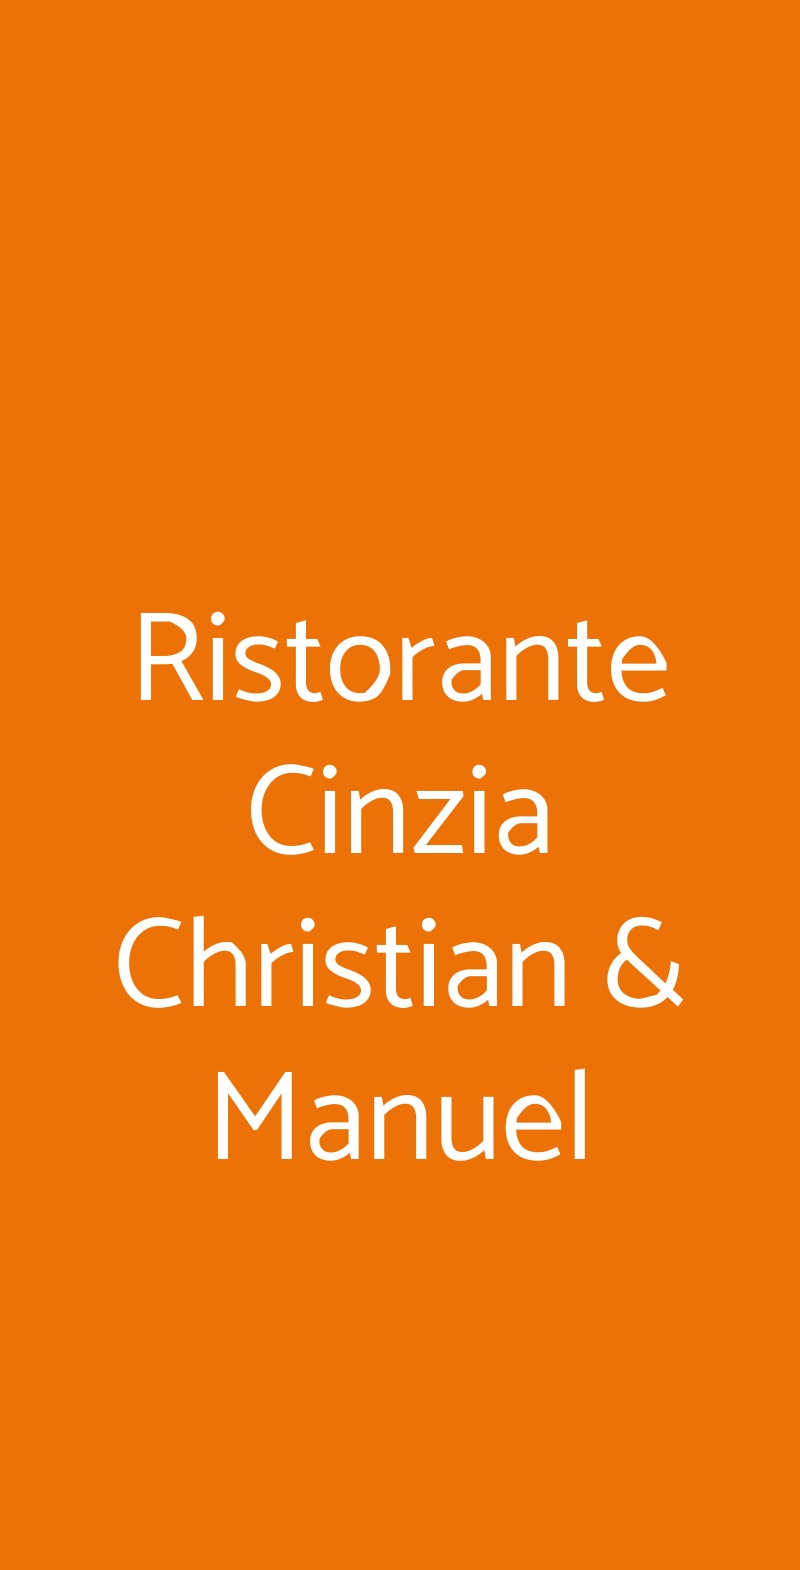 Ristorante Cinzia Christian & Manuel Vercelli menù 1 pagina